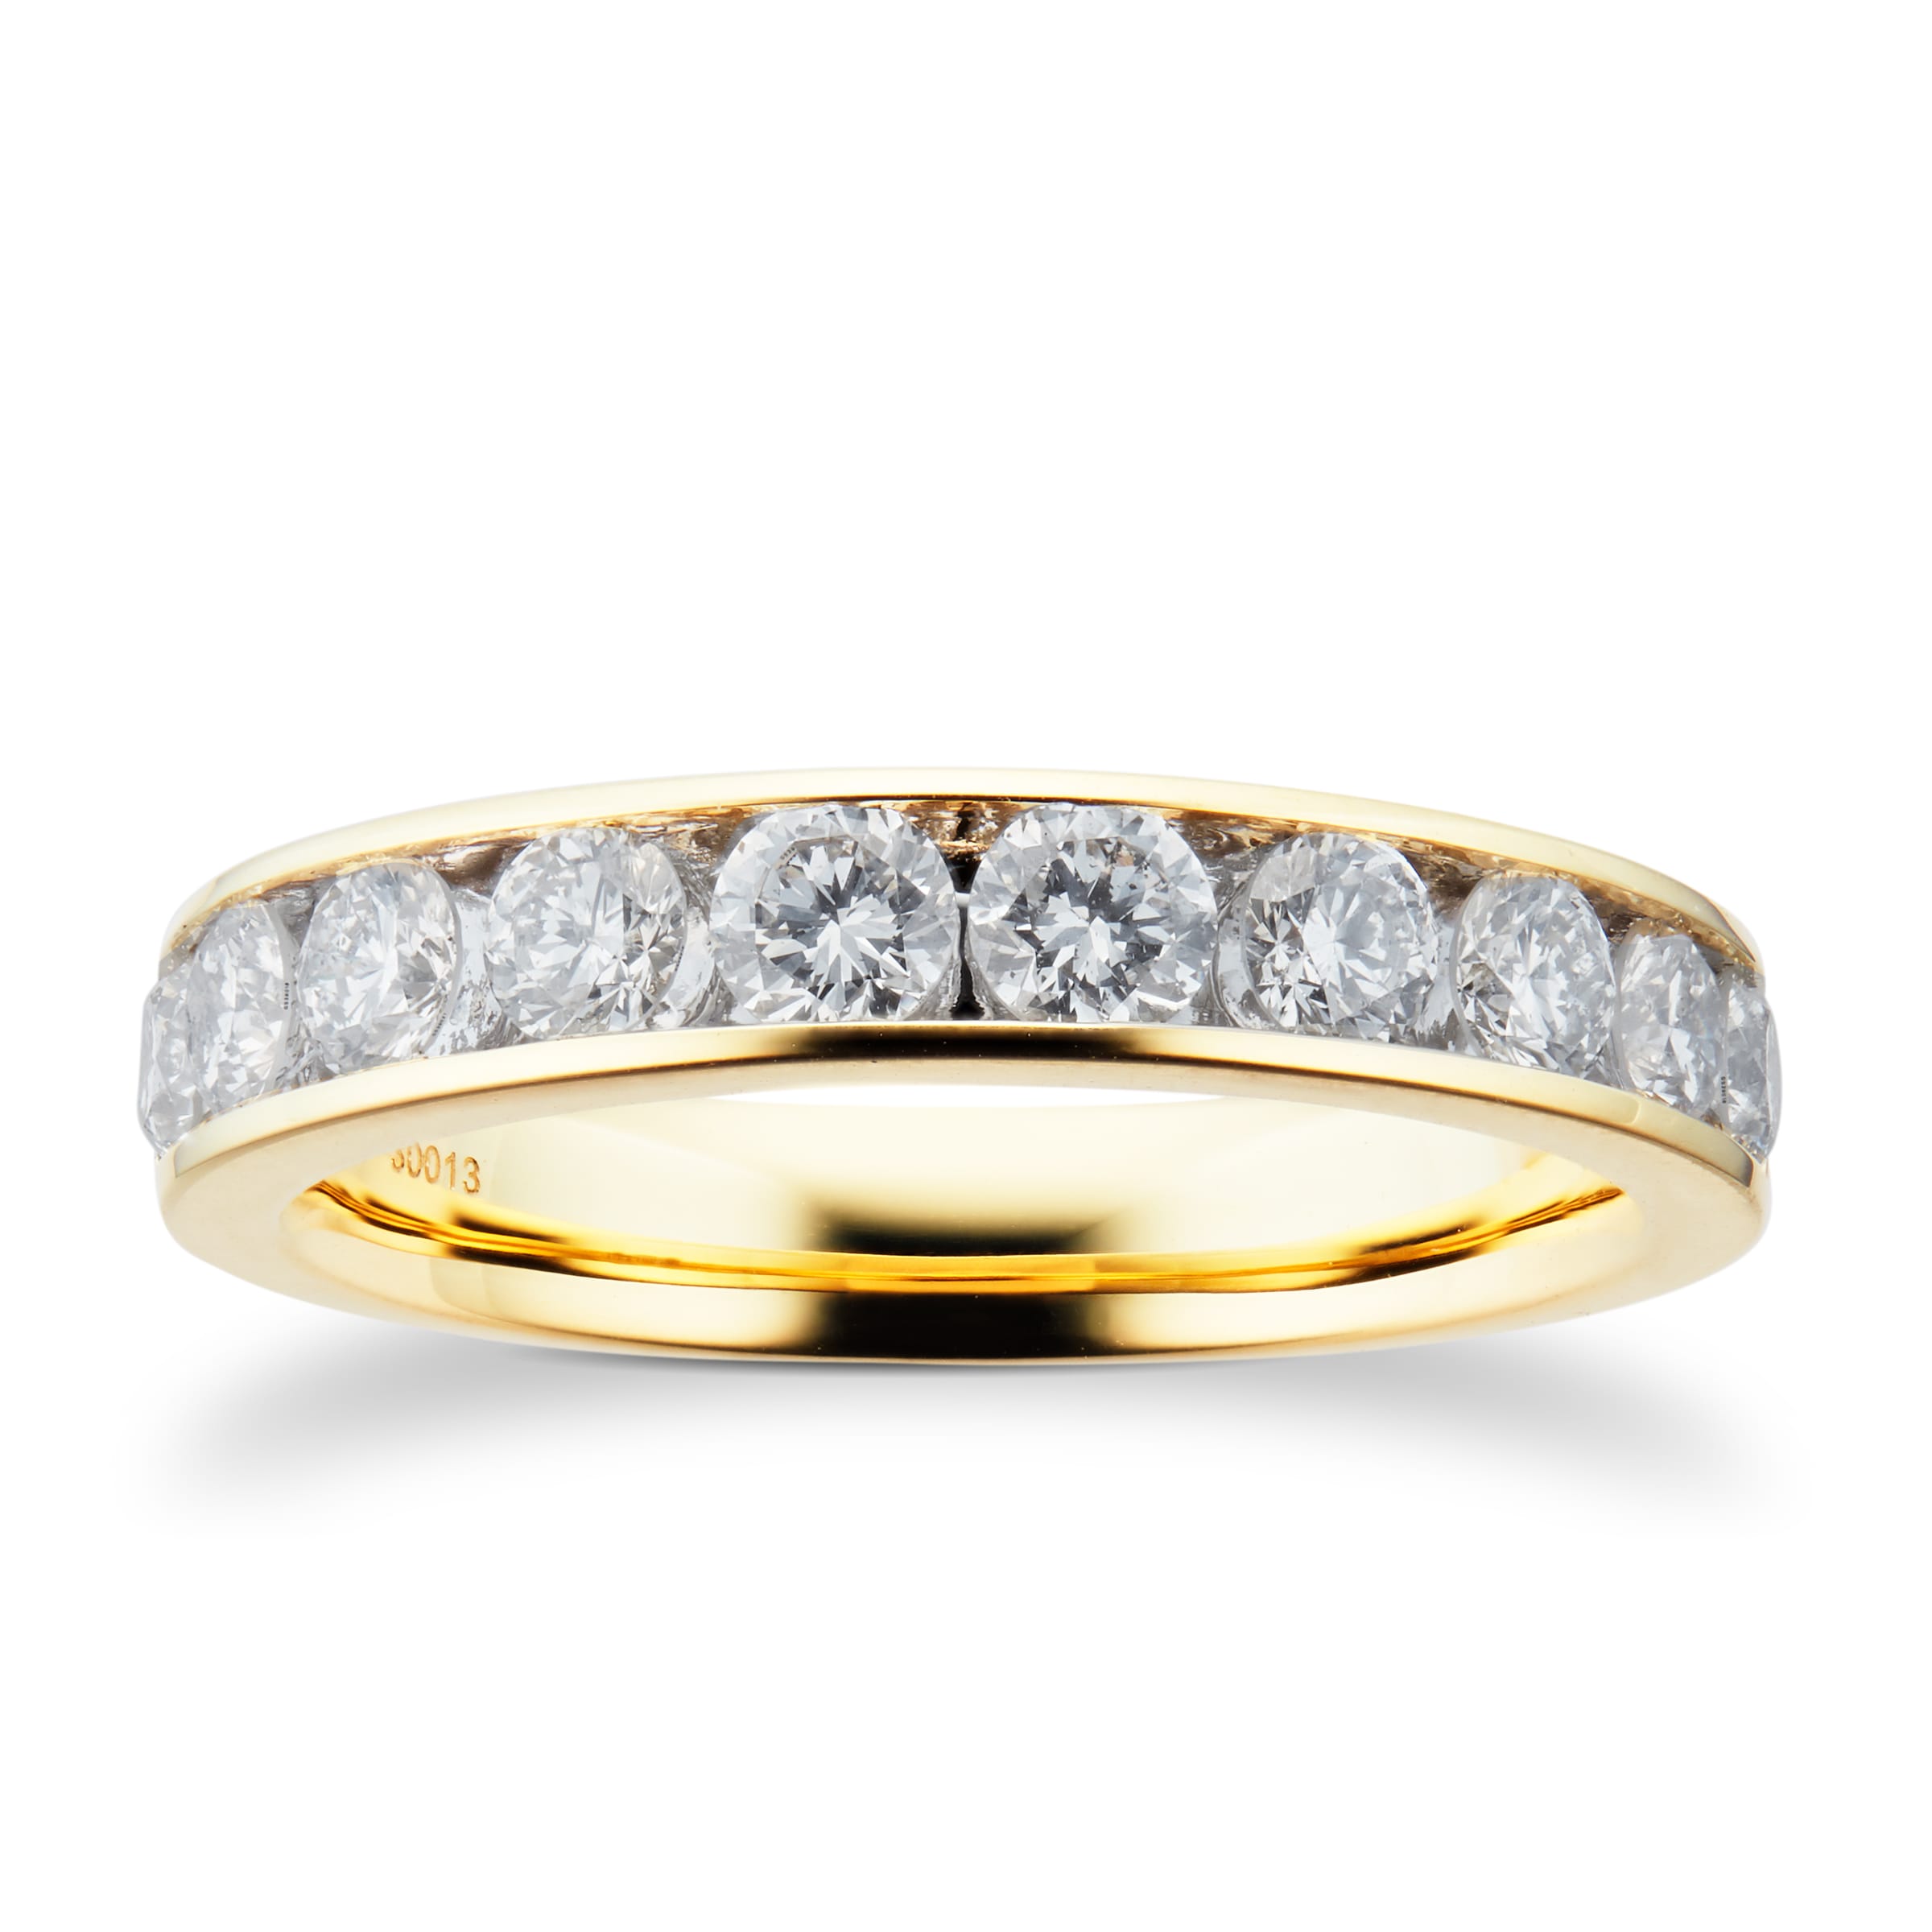 18ct Yellow Gold 1.00ct Brilliant Cut Goldsmiths Brightest Diamond Eternity Ring - Ring Size Q